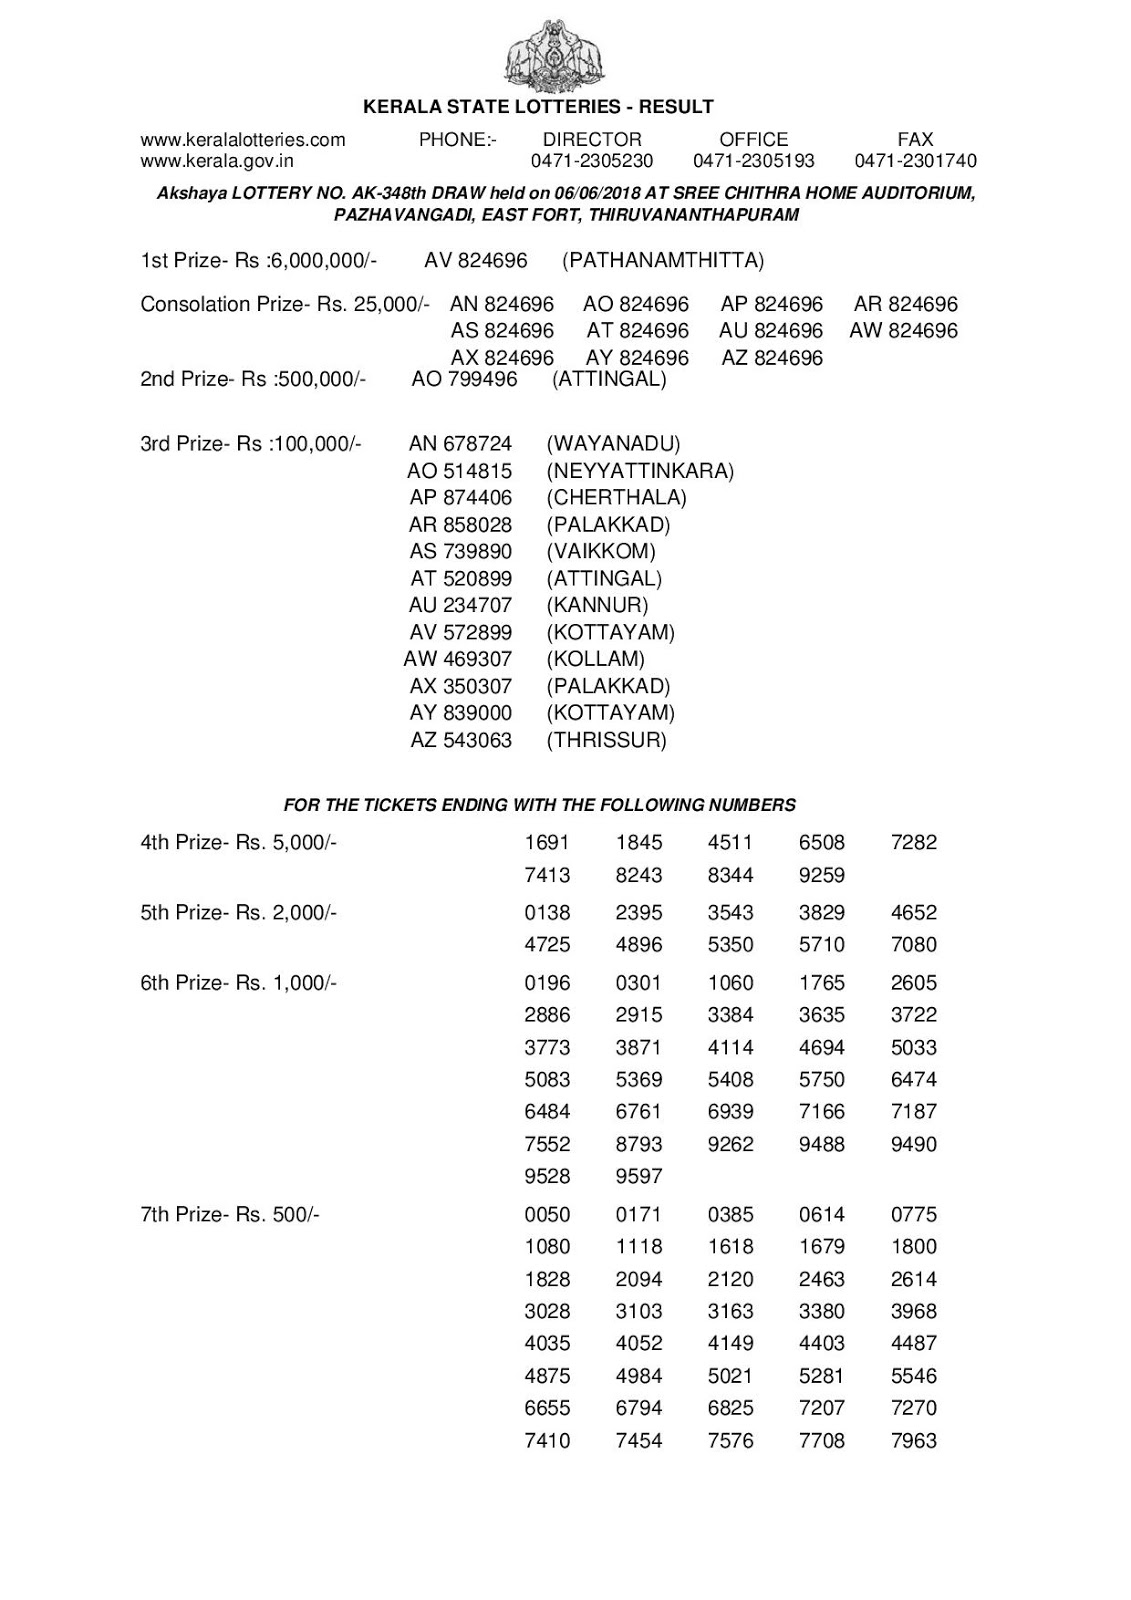 Kerala Lottery Results Today 06.06.2018 Official PDF: Akshaya AK-348 Result